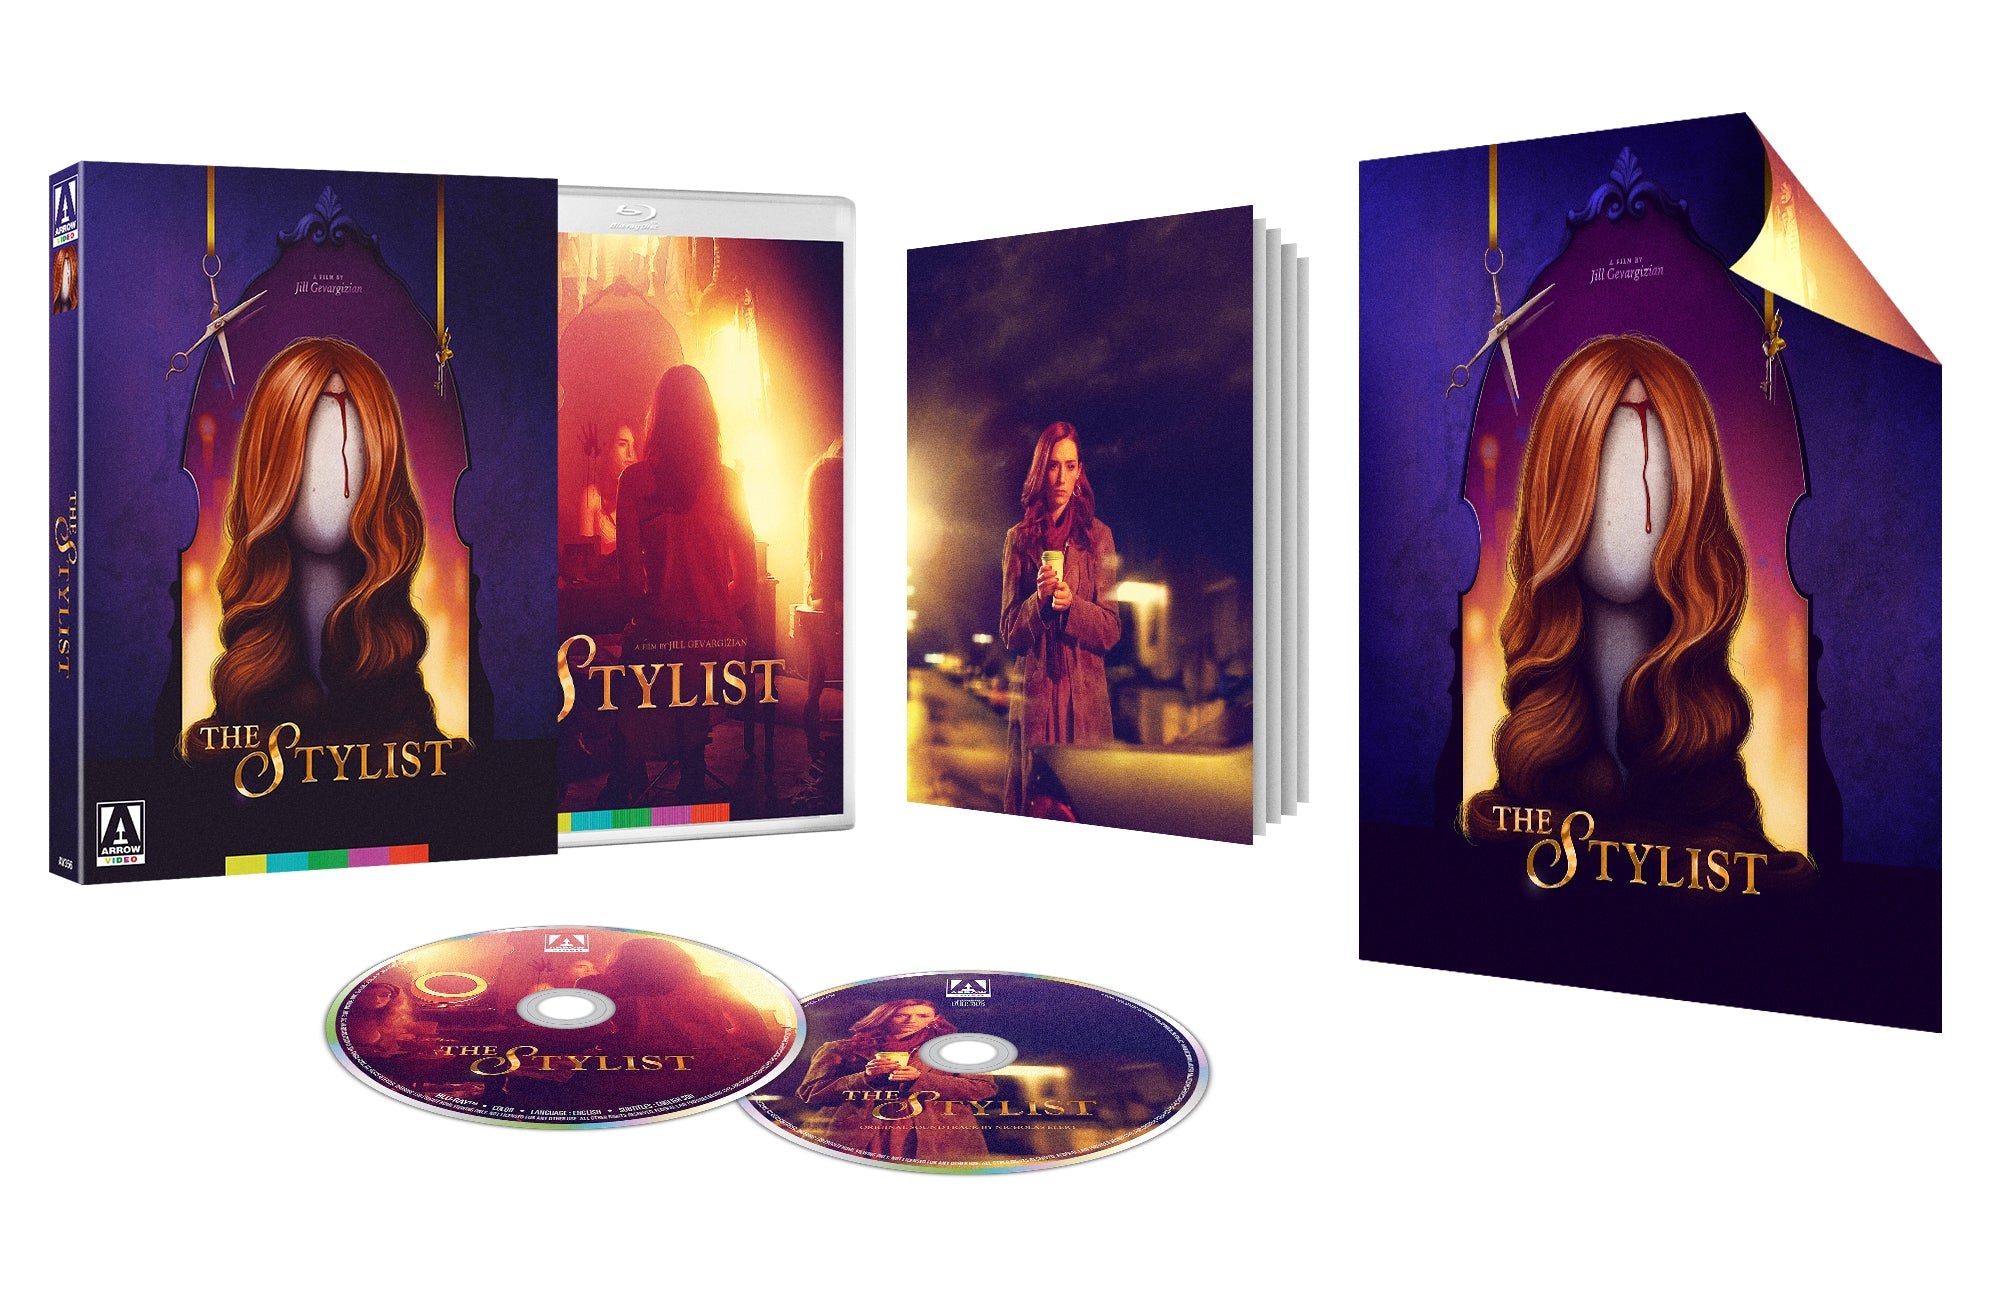 The Stylist (Limited Edition) Blu-Ray/cd Blu-Ray